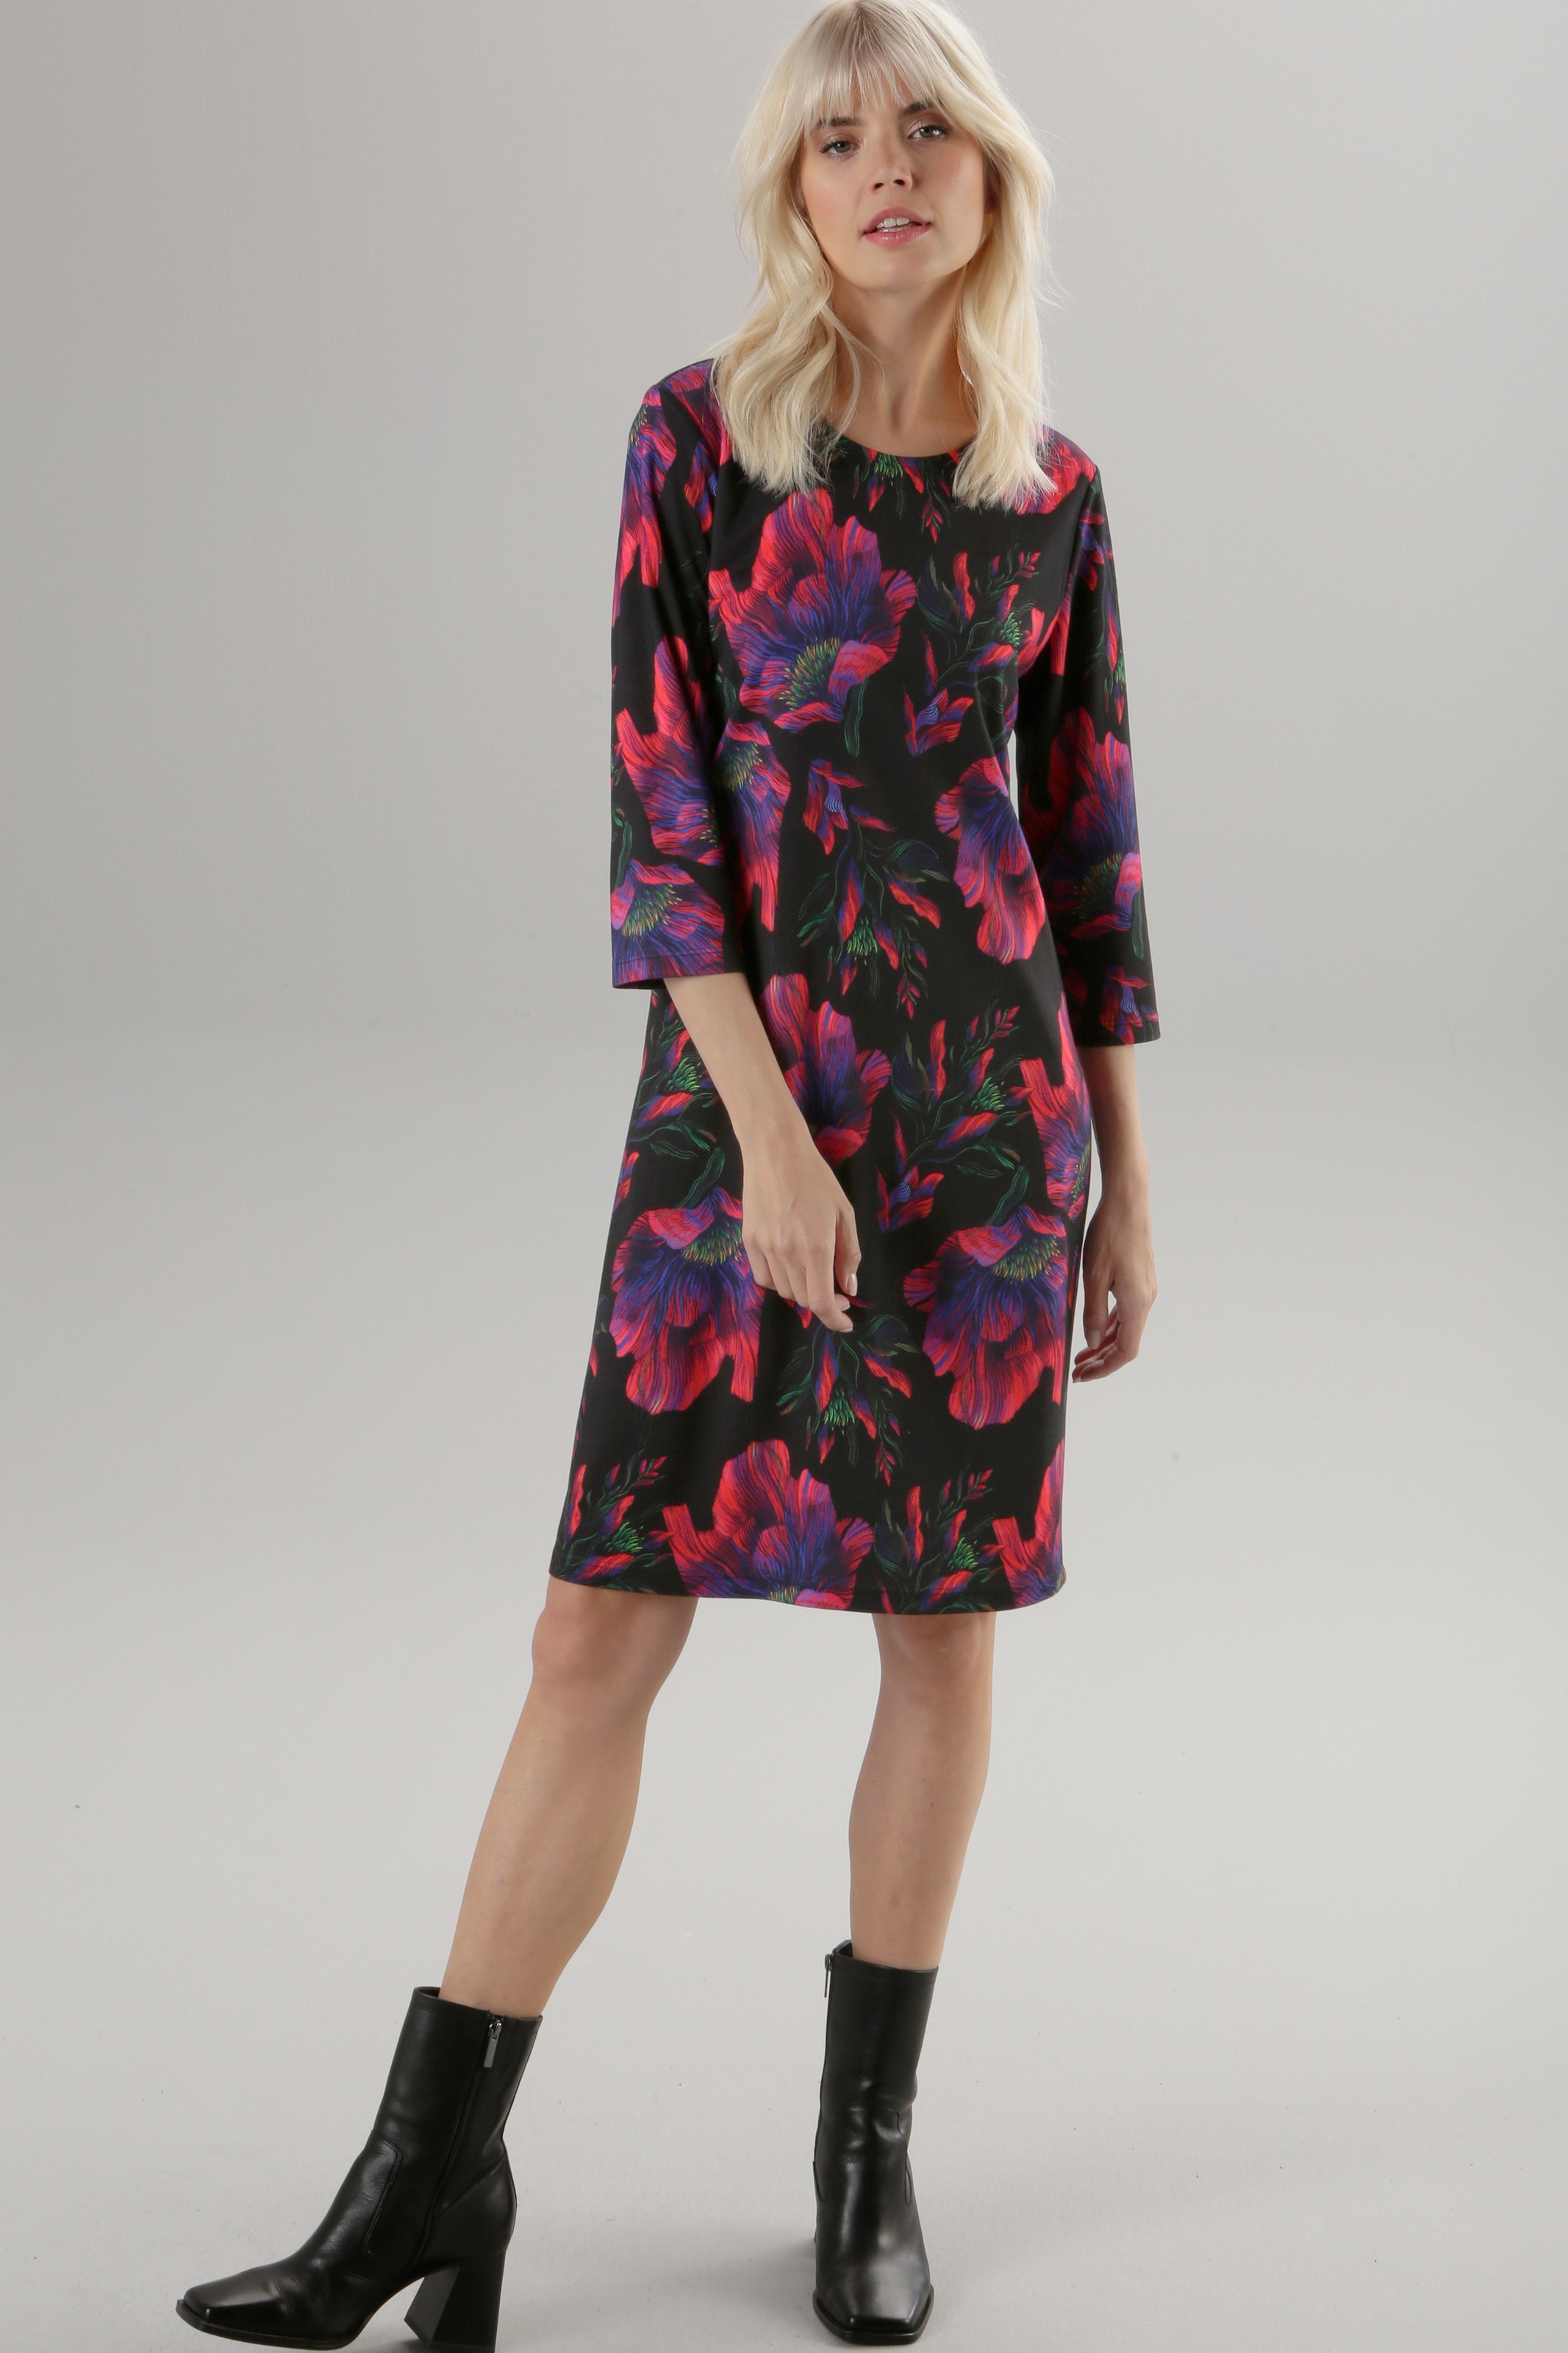 Aniston SELECTED Jerseykleid, mit Knallfarben bei in Blumendruck